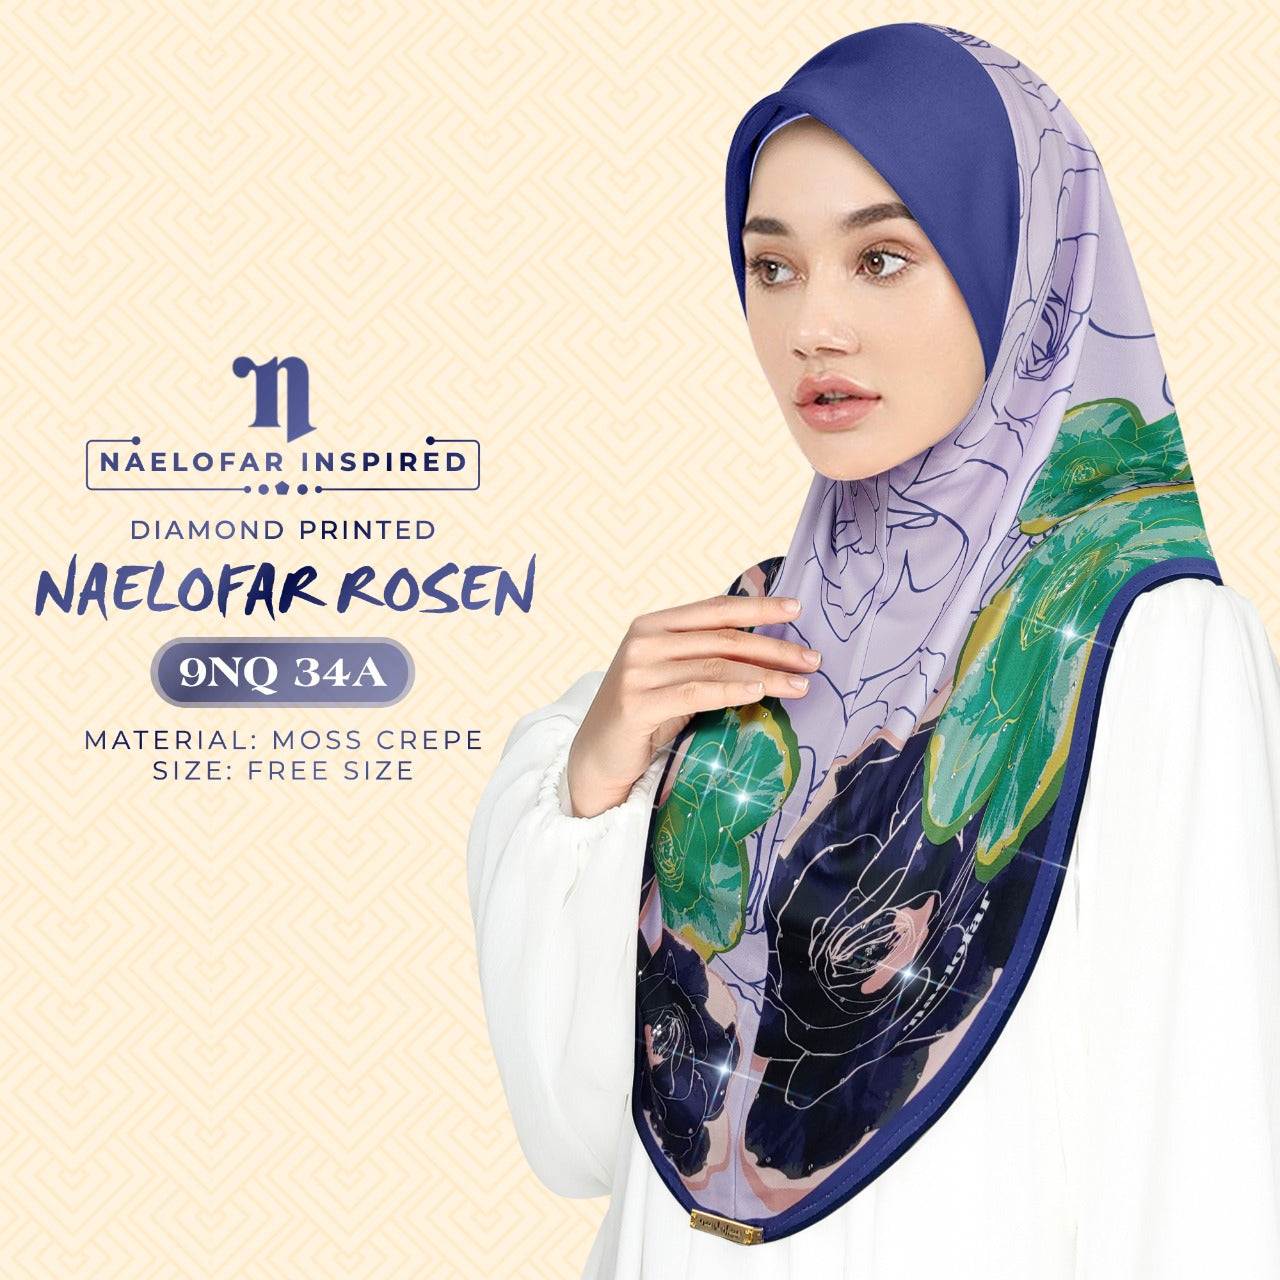 Naelofar Instant Printed Rosen Diamond Collection RM12